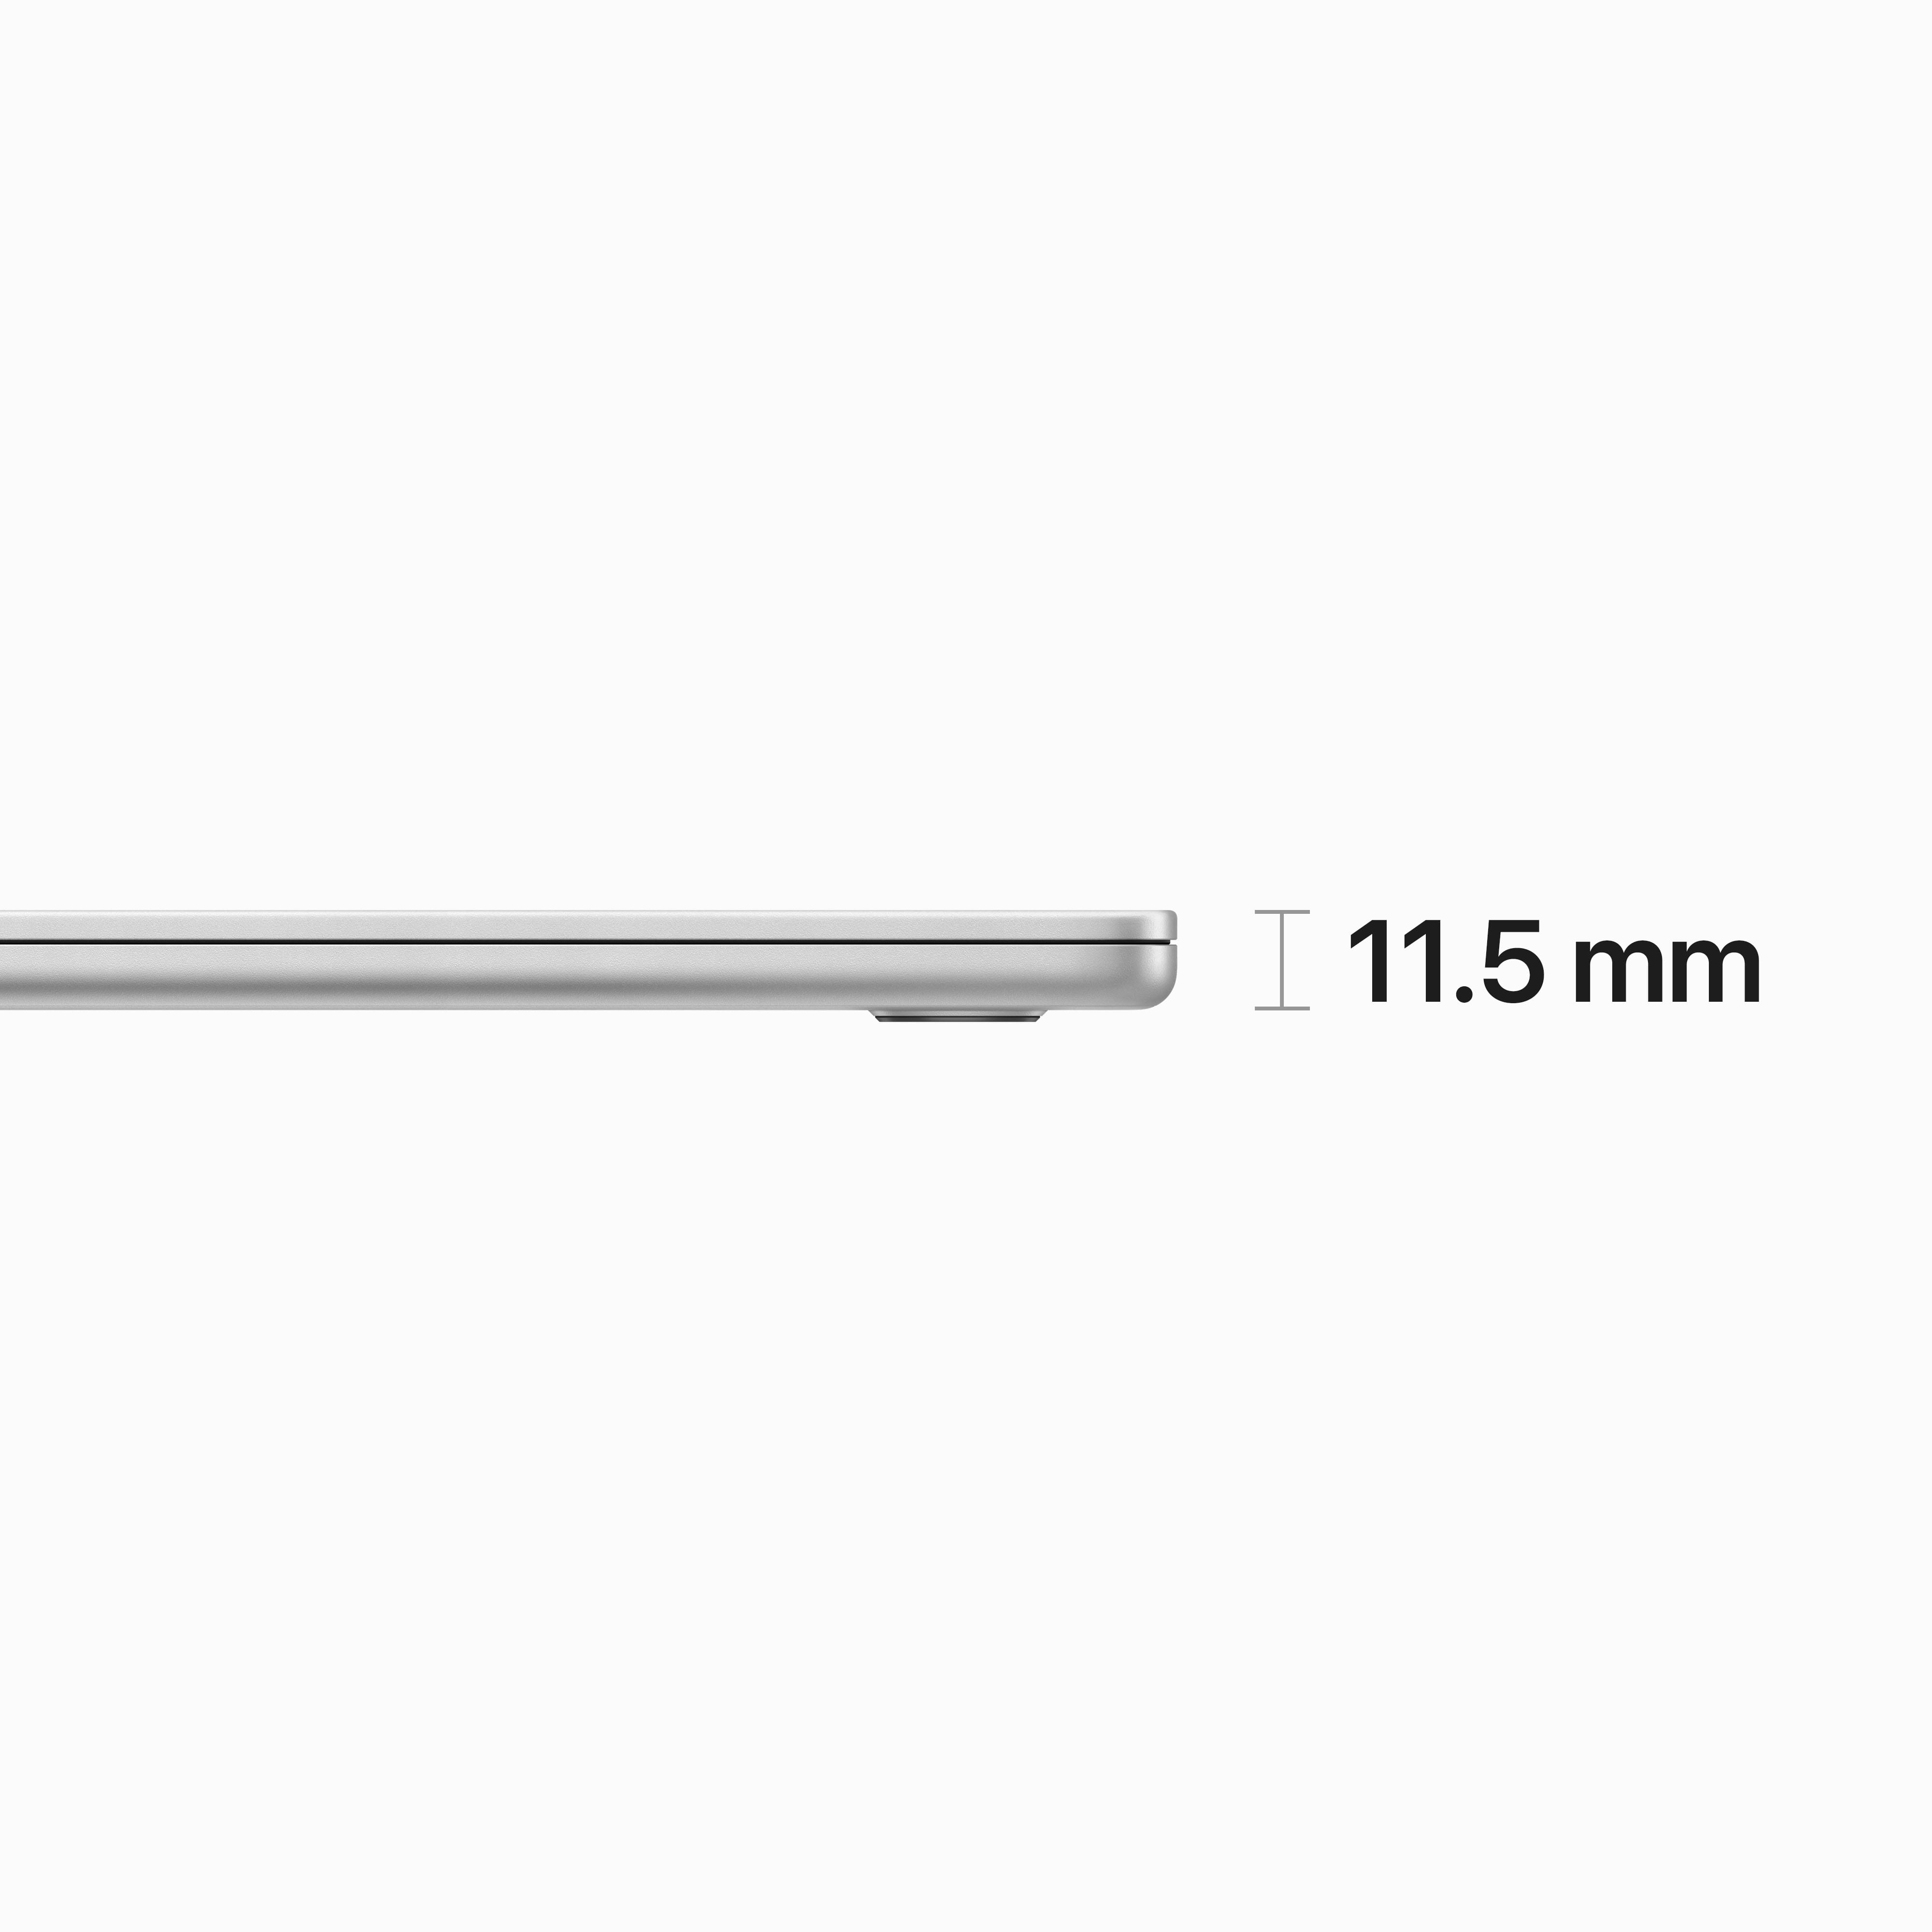 '15-inch MacBook Air: Apple M2 chip with 8-core CPU and 10-core GPU 256GB - Silver ???? ???? ?? ????'